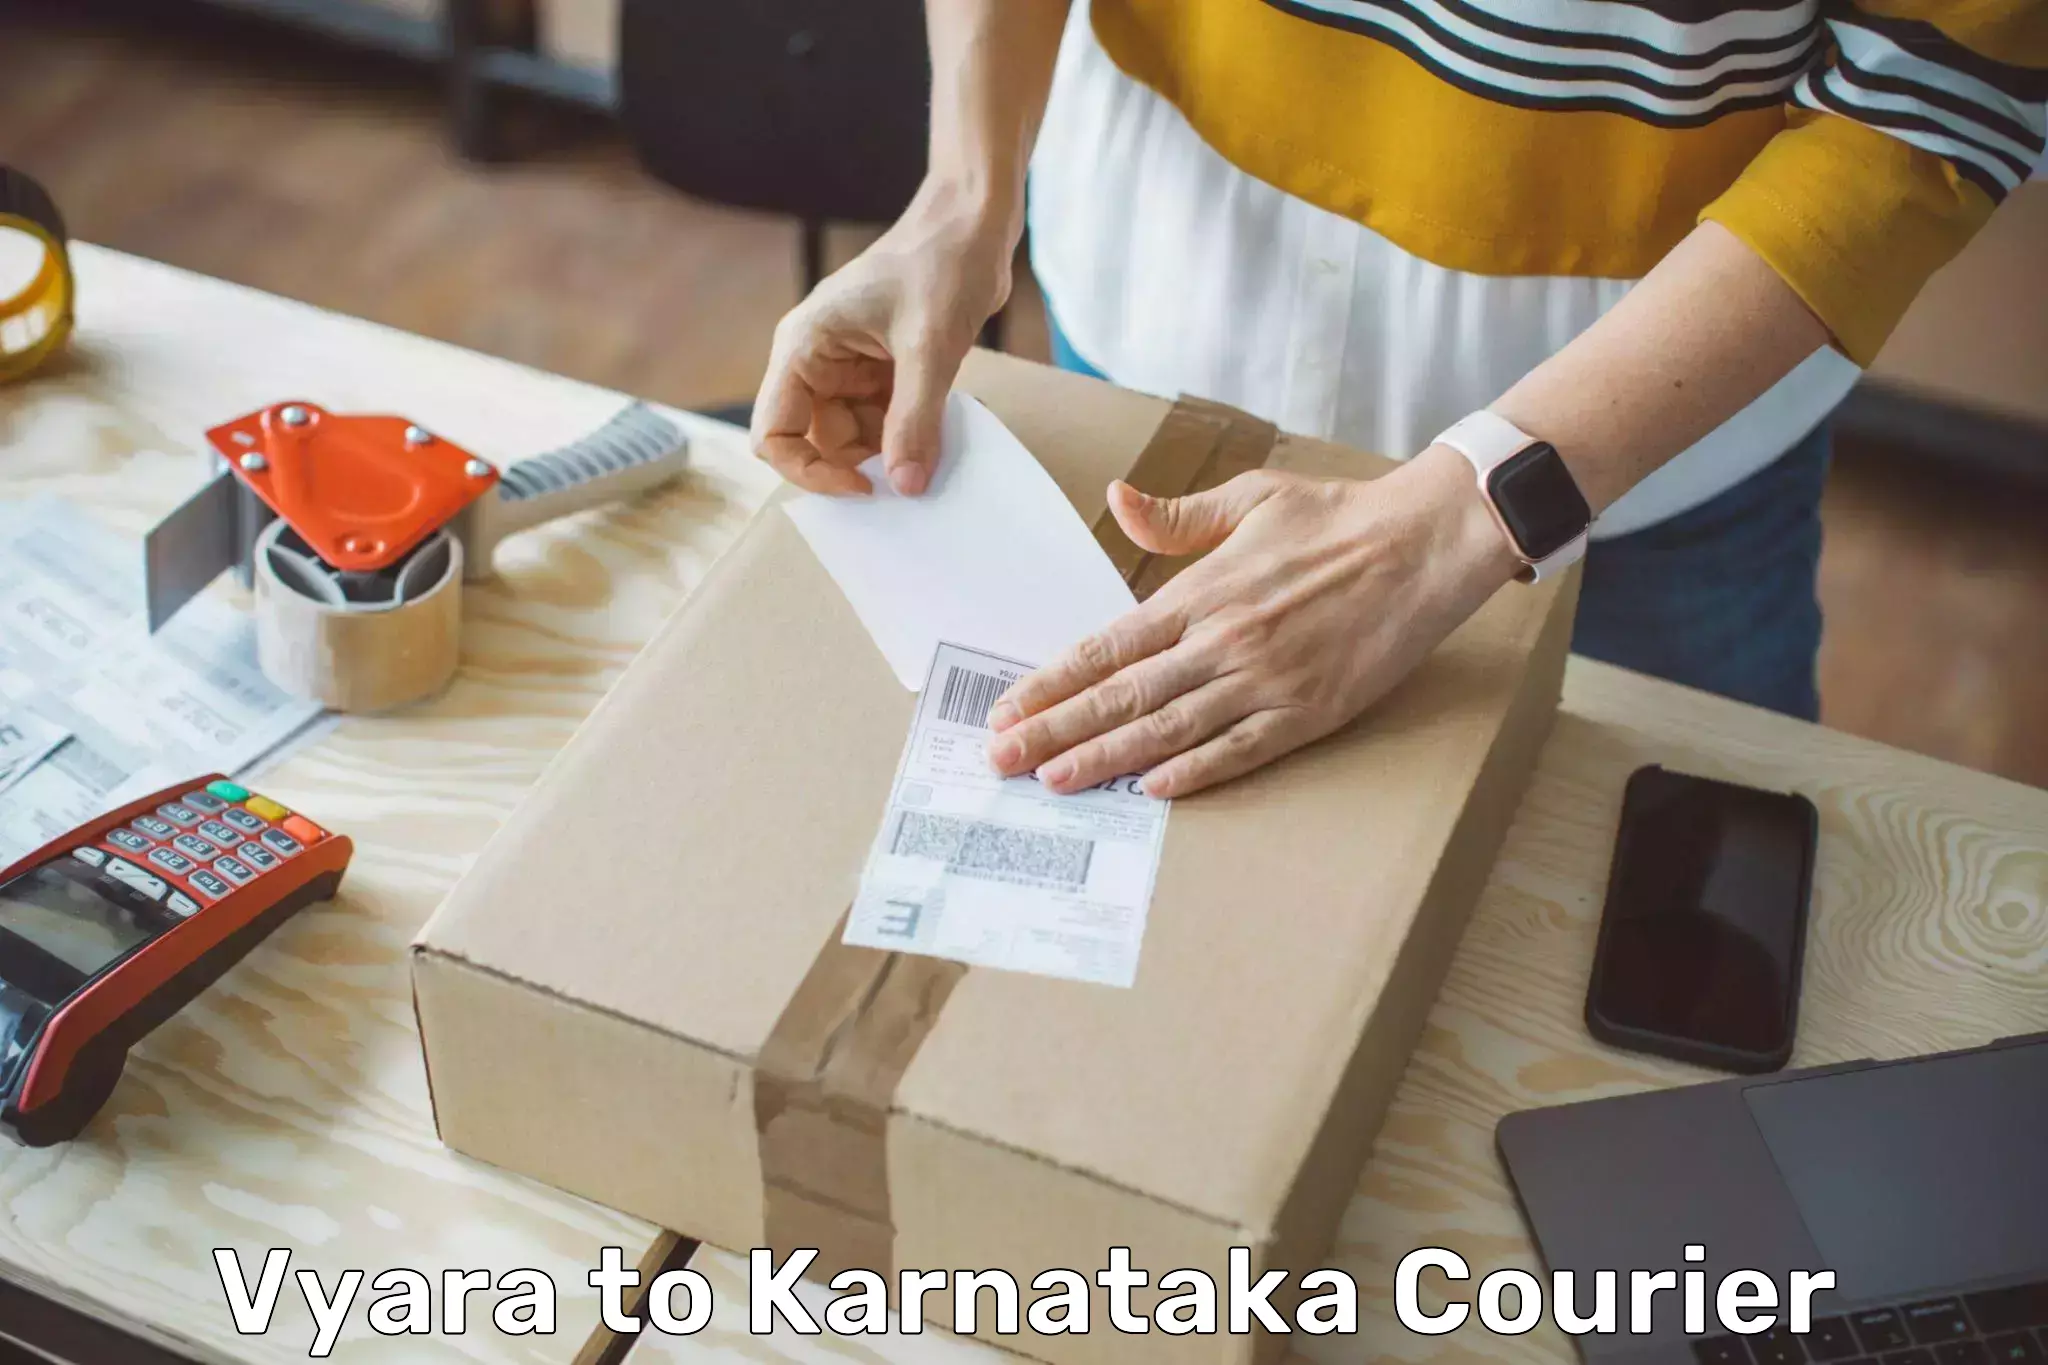 Cargo delivery service Vyara to Karnataka